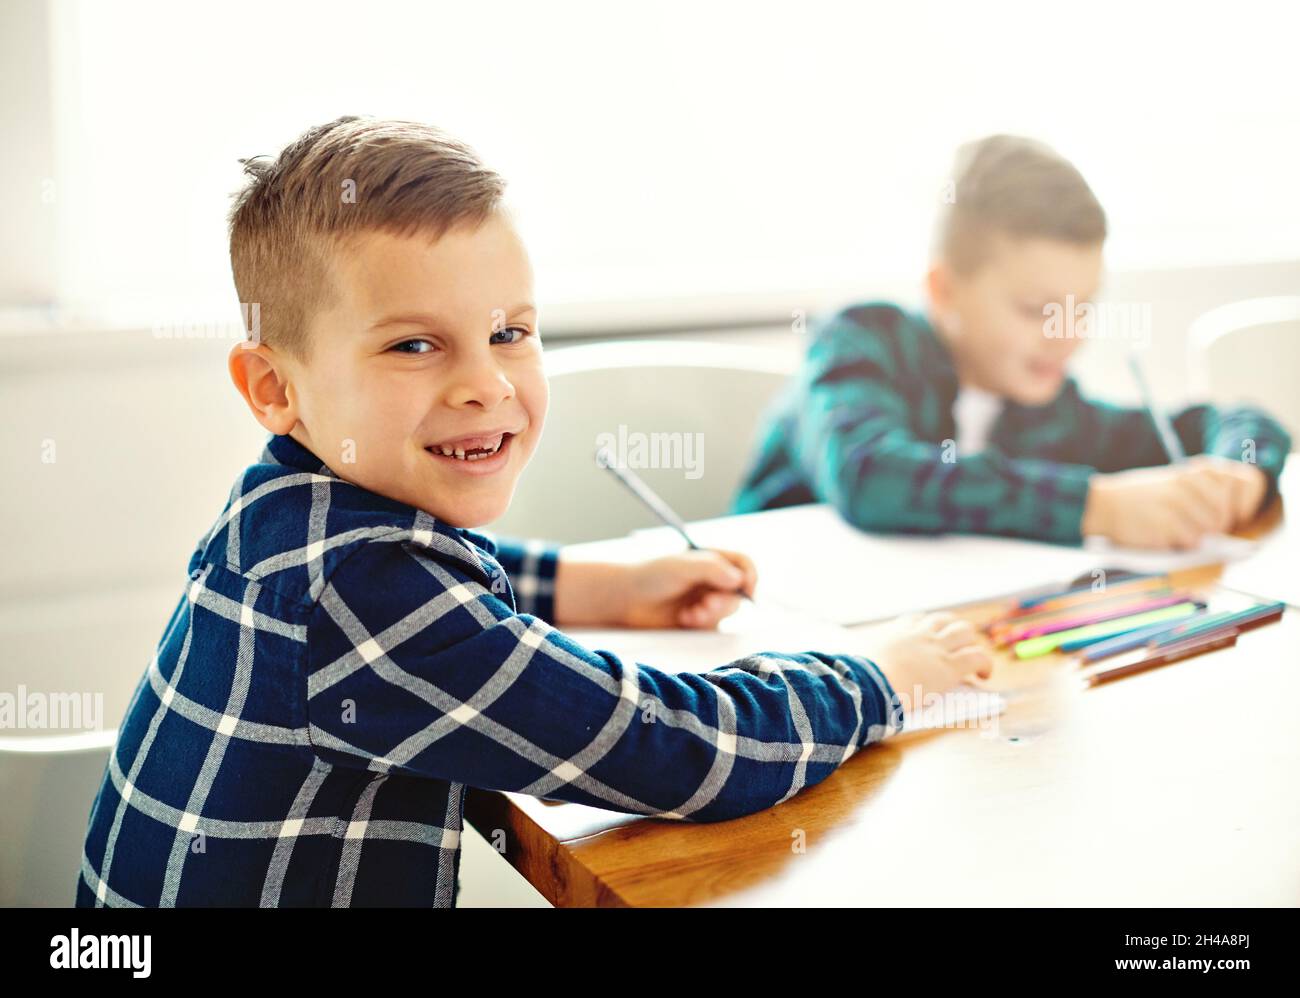 child boy homework school education classroom studying childhood home kid student learning writing Stock Photo